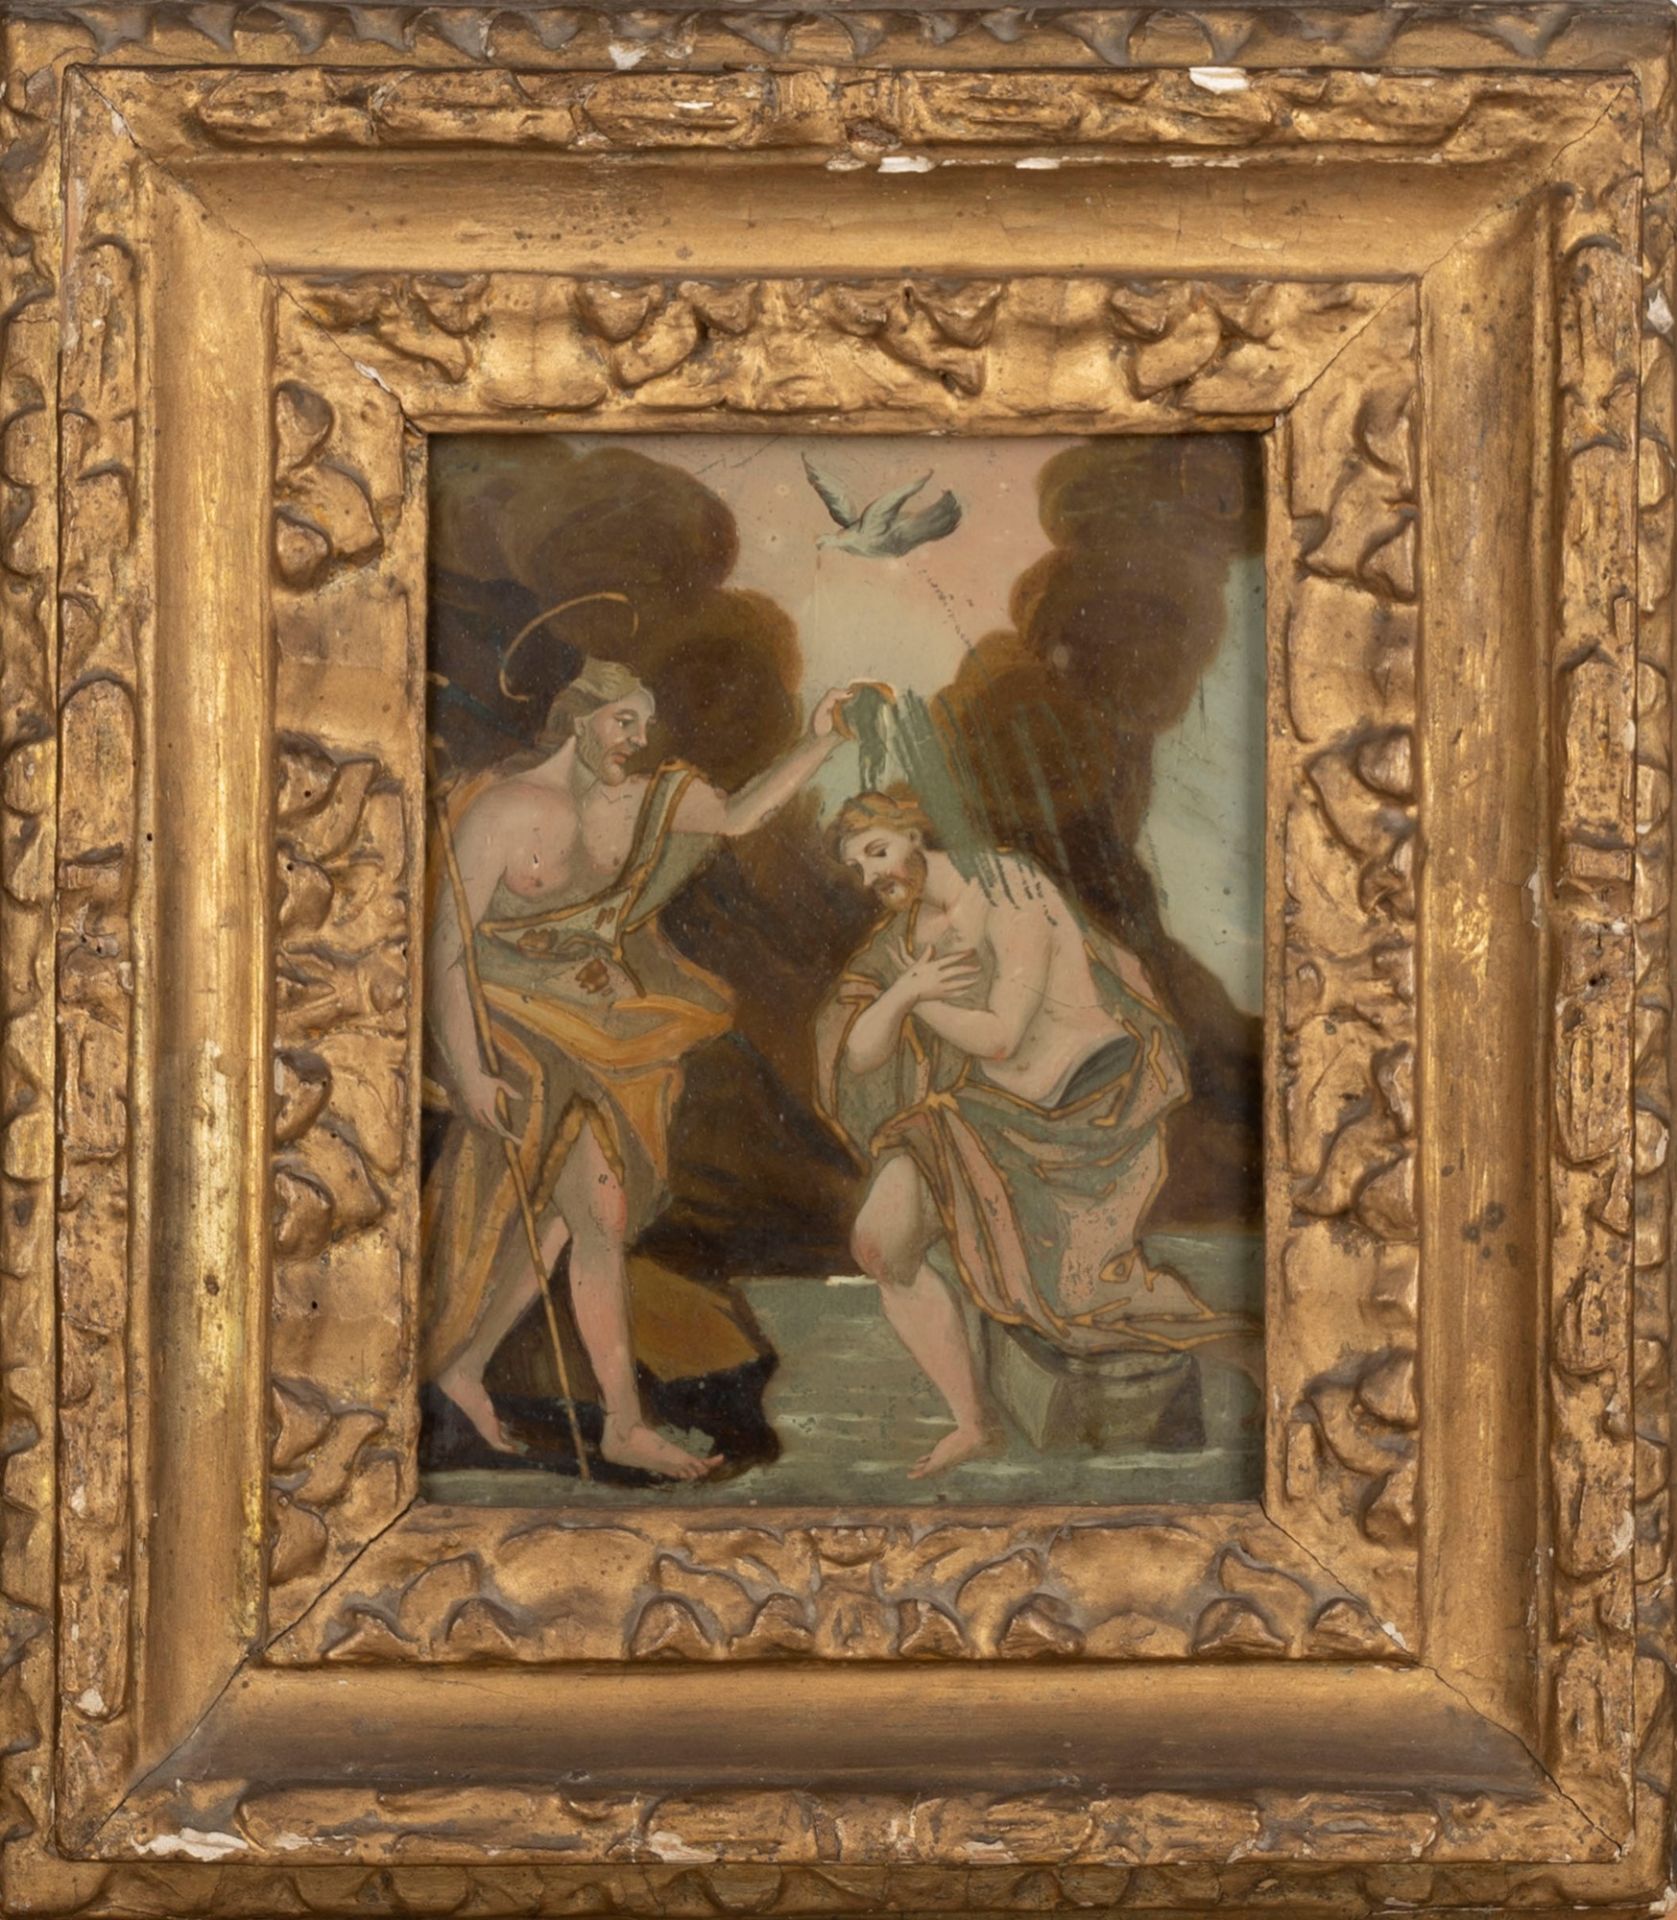 Neapolitan school, XVIII century - Painting under glass depicting the Baptism of Christ